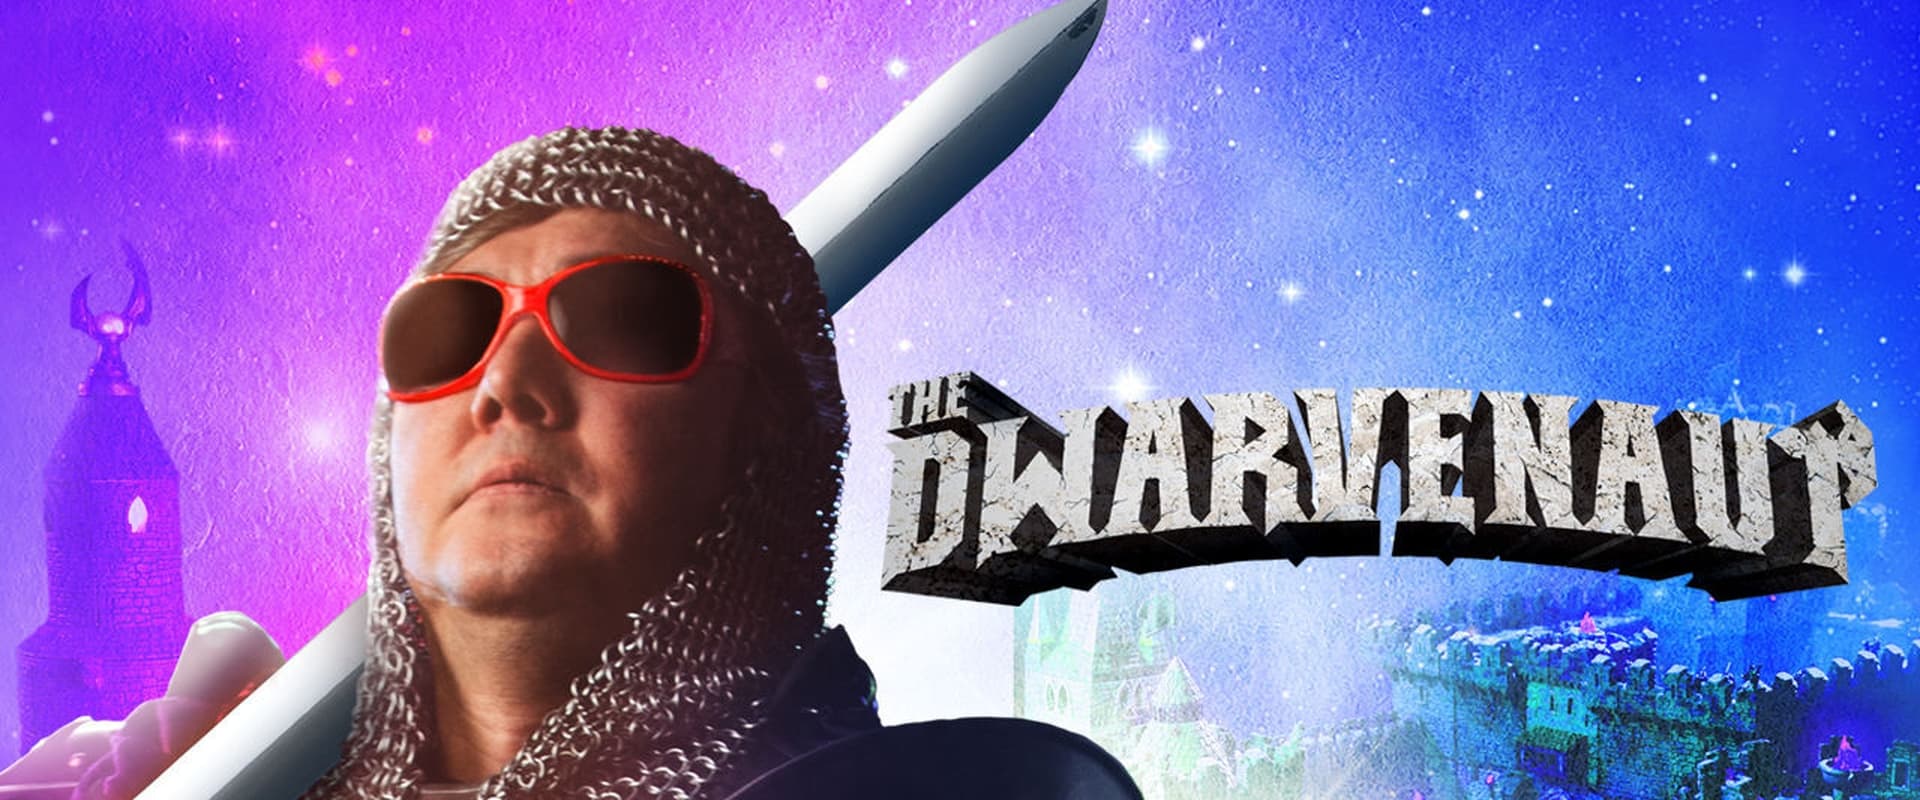 The Dwarvenaut